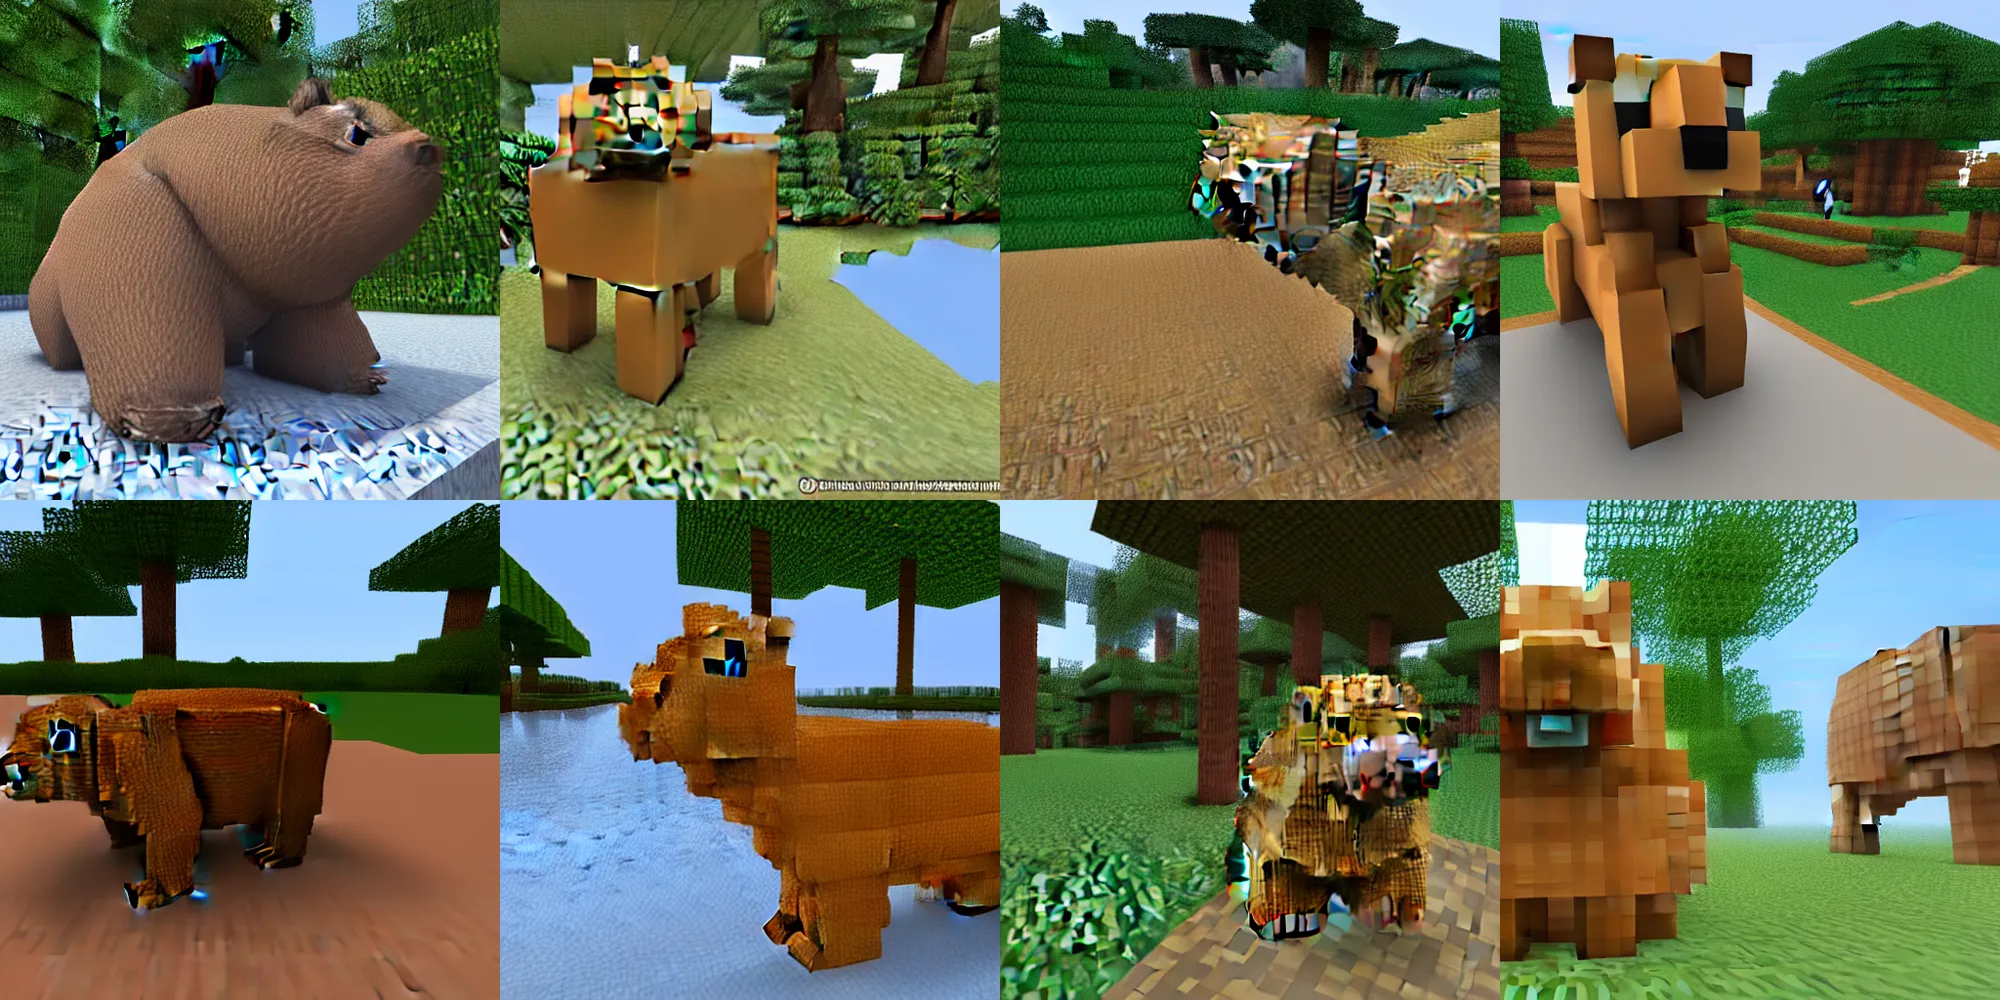 Prompt: Capybara Statue built in Minecraft